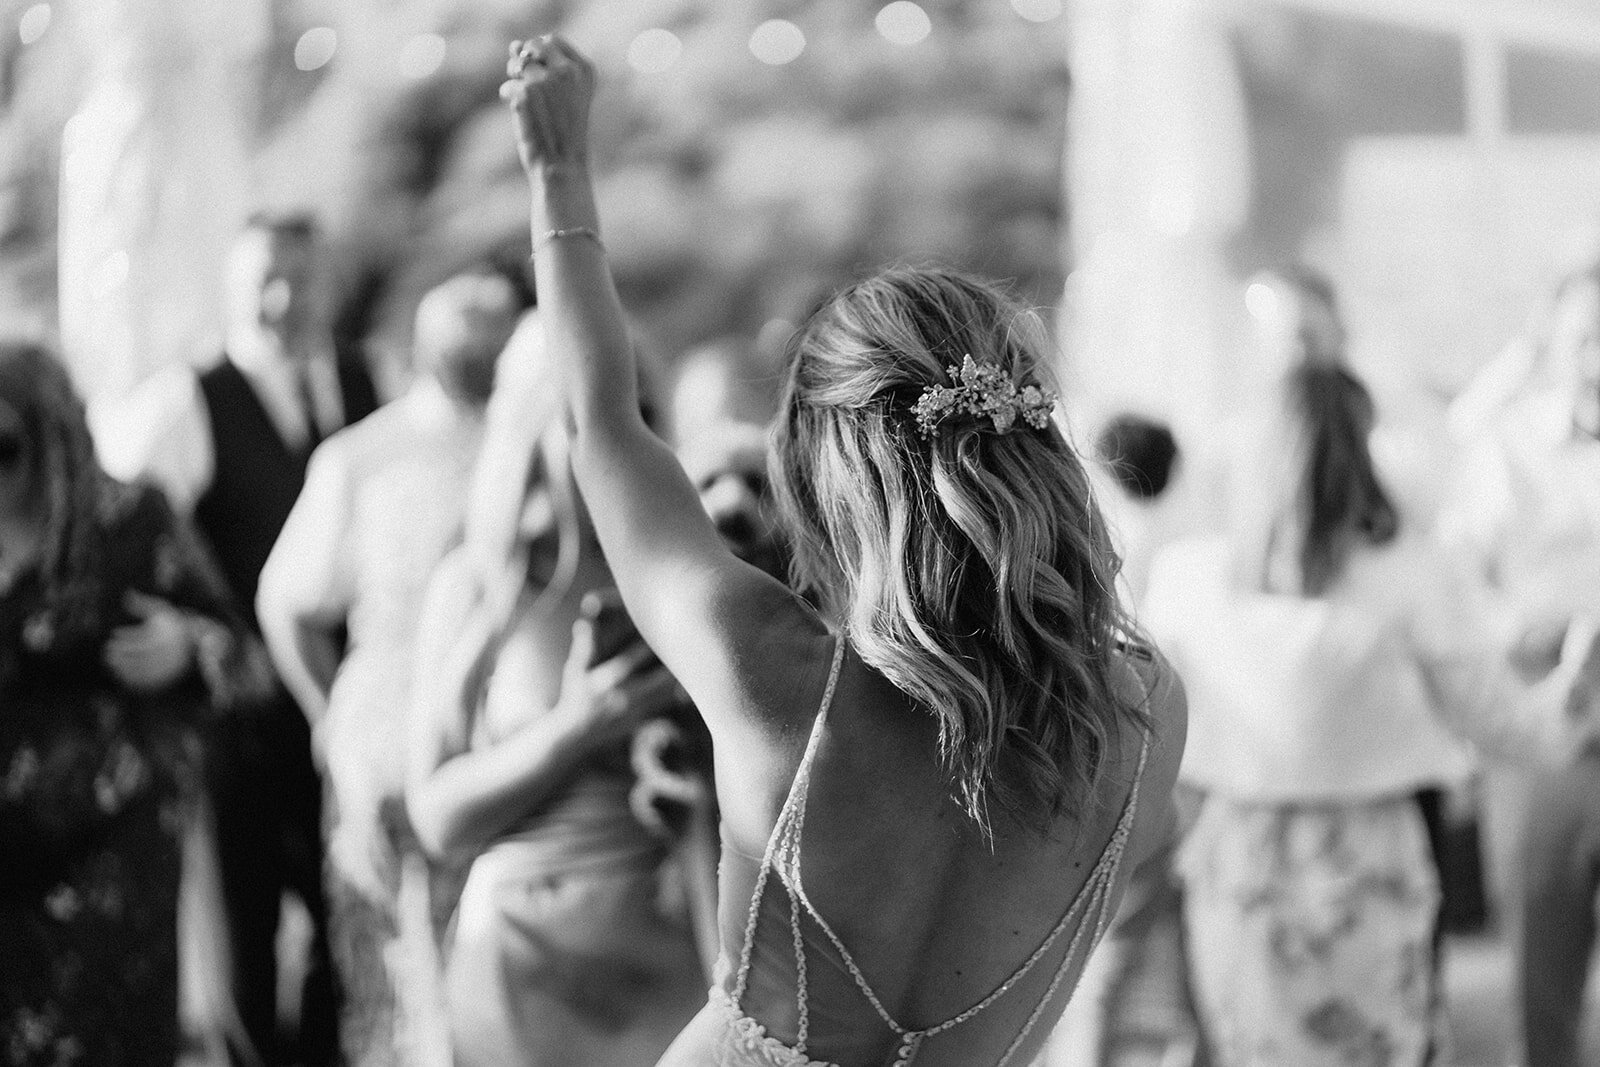 Making people dance and fall over for over 30 years! 🕺

#musicformusiclovers #dancelikenooneswatching #fistralstereo #cornwallweddingdj #cornishdj #djcornwall #djincornwall #weddingdjcornwall 

📷 @puravidacornwall